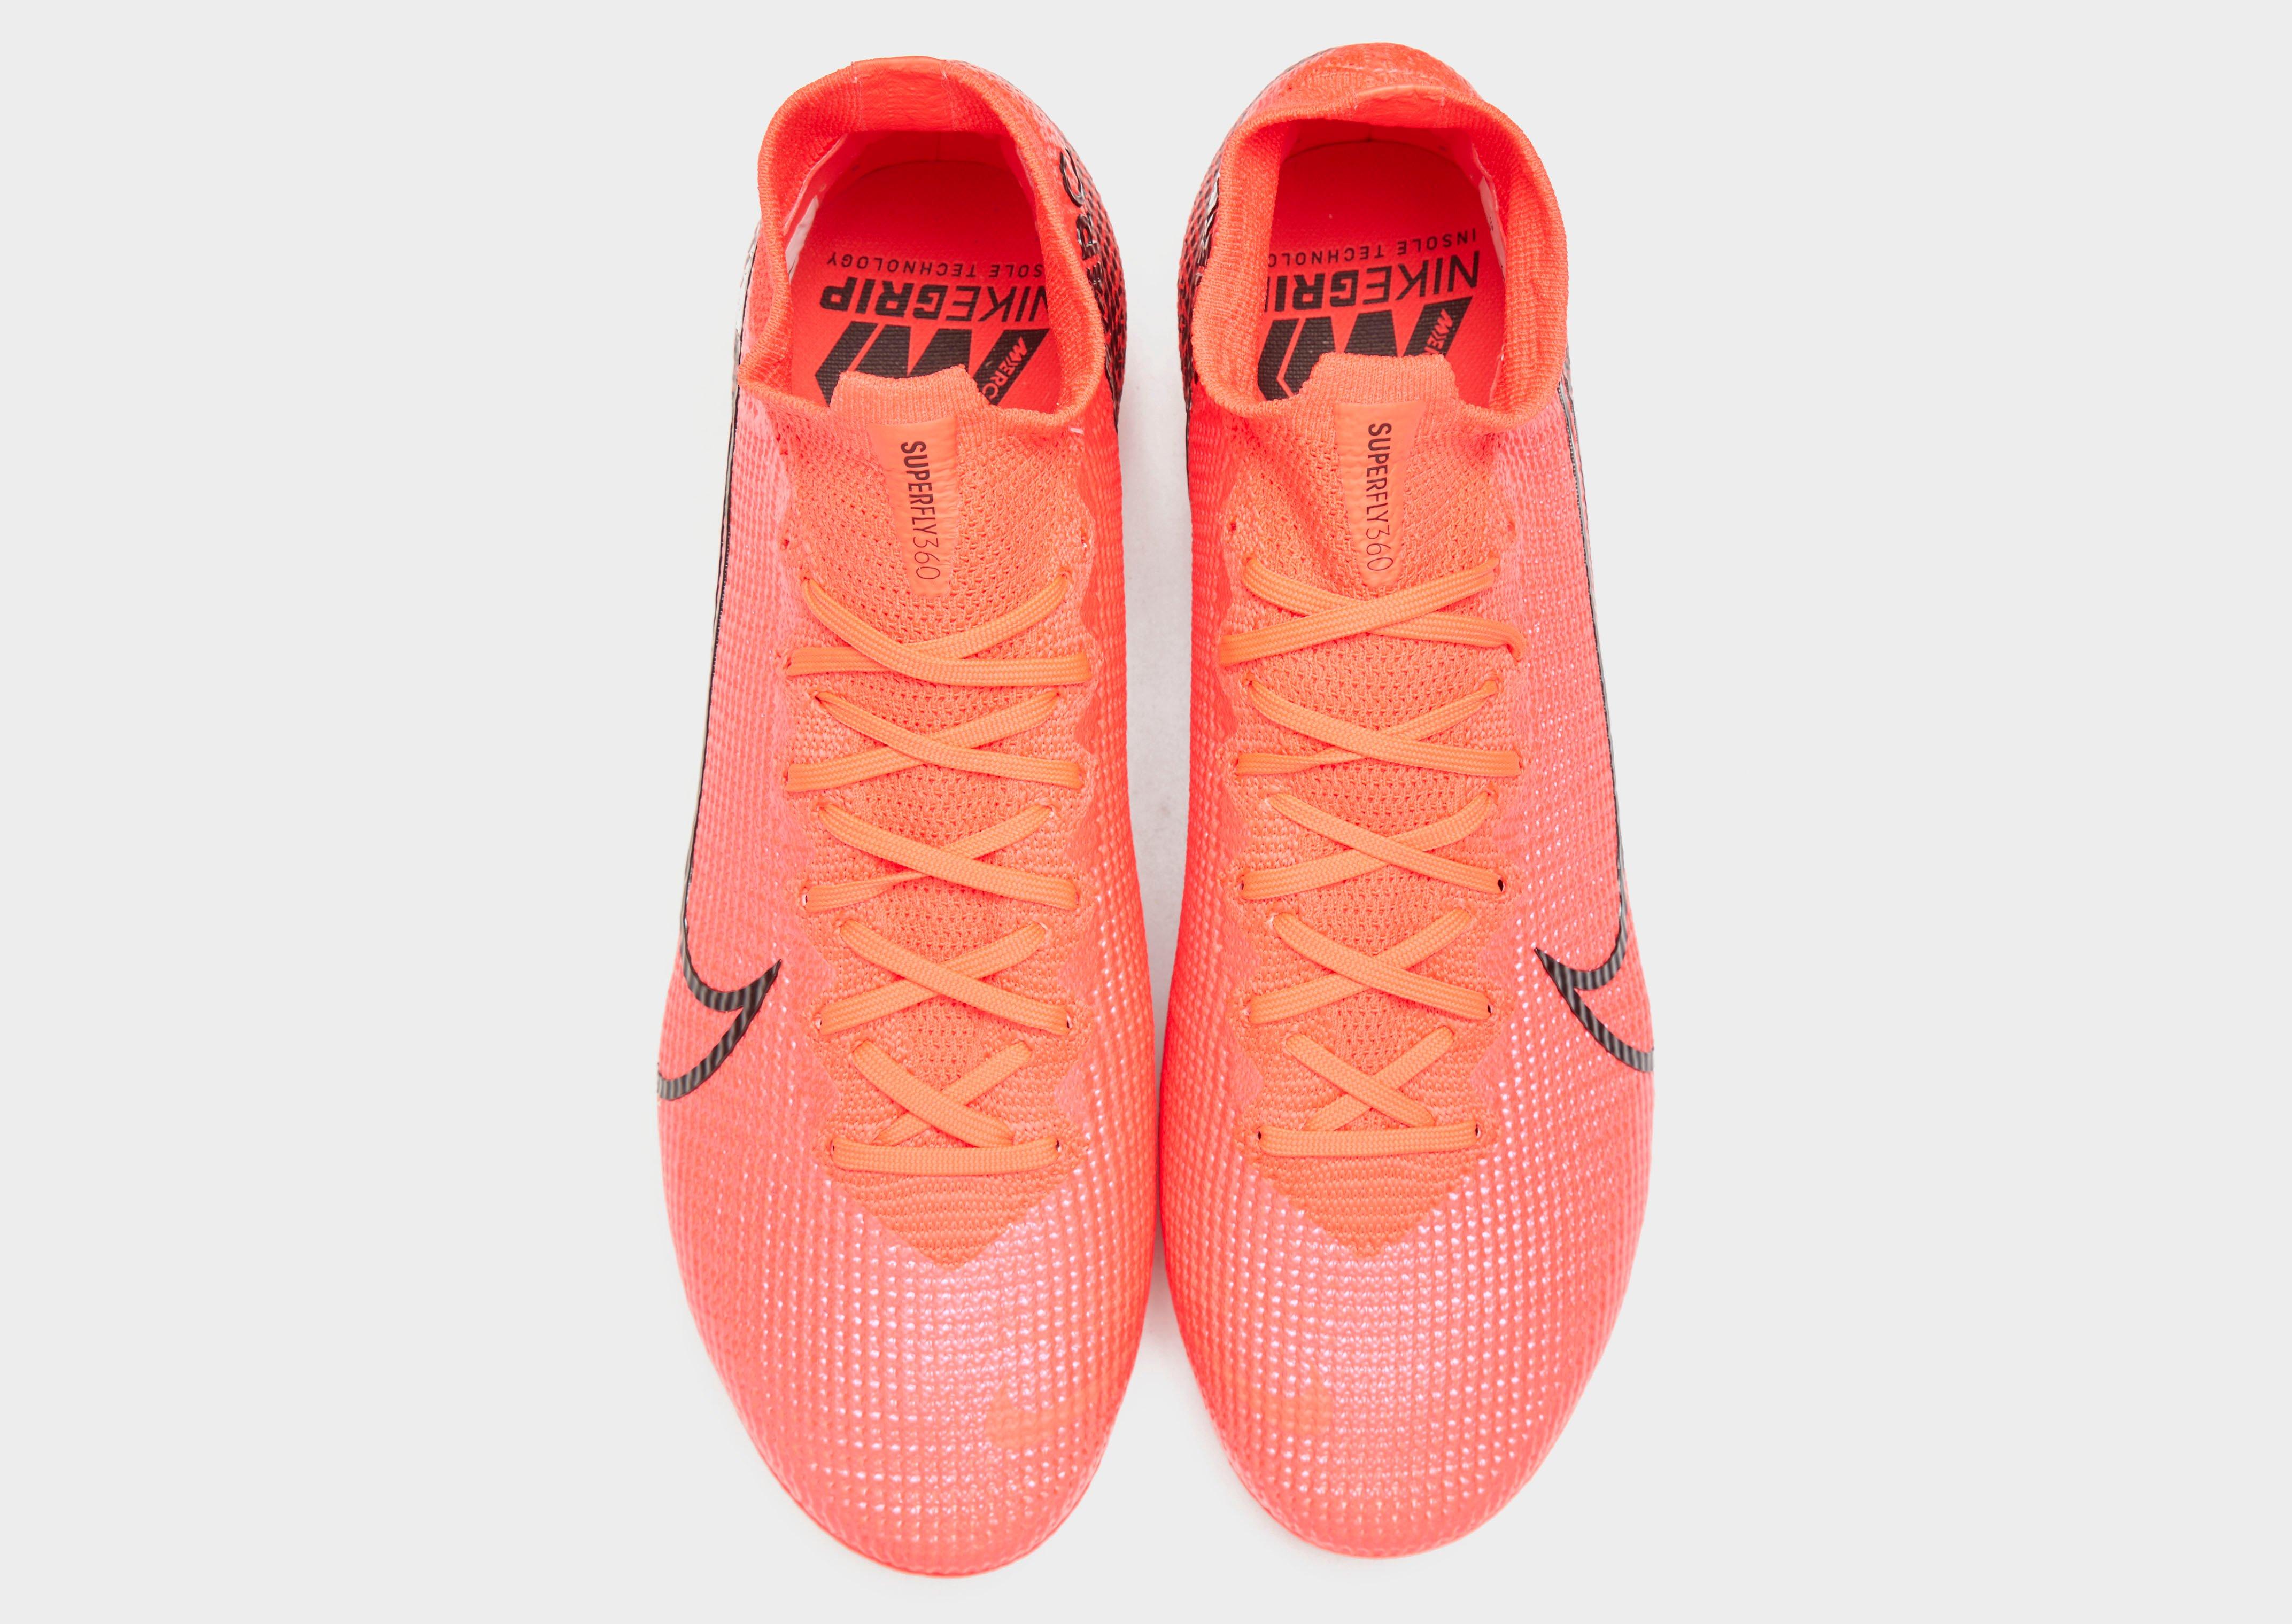 Foot chaussures Nike Mercurial Superfly VI Elite FG Gris.